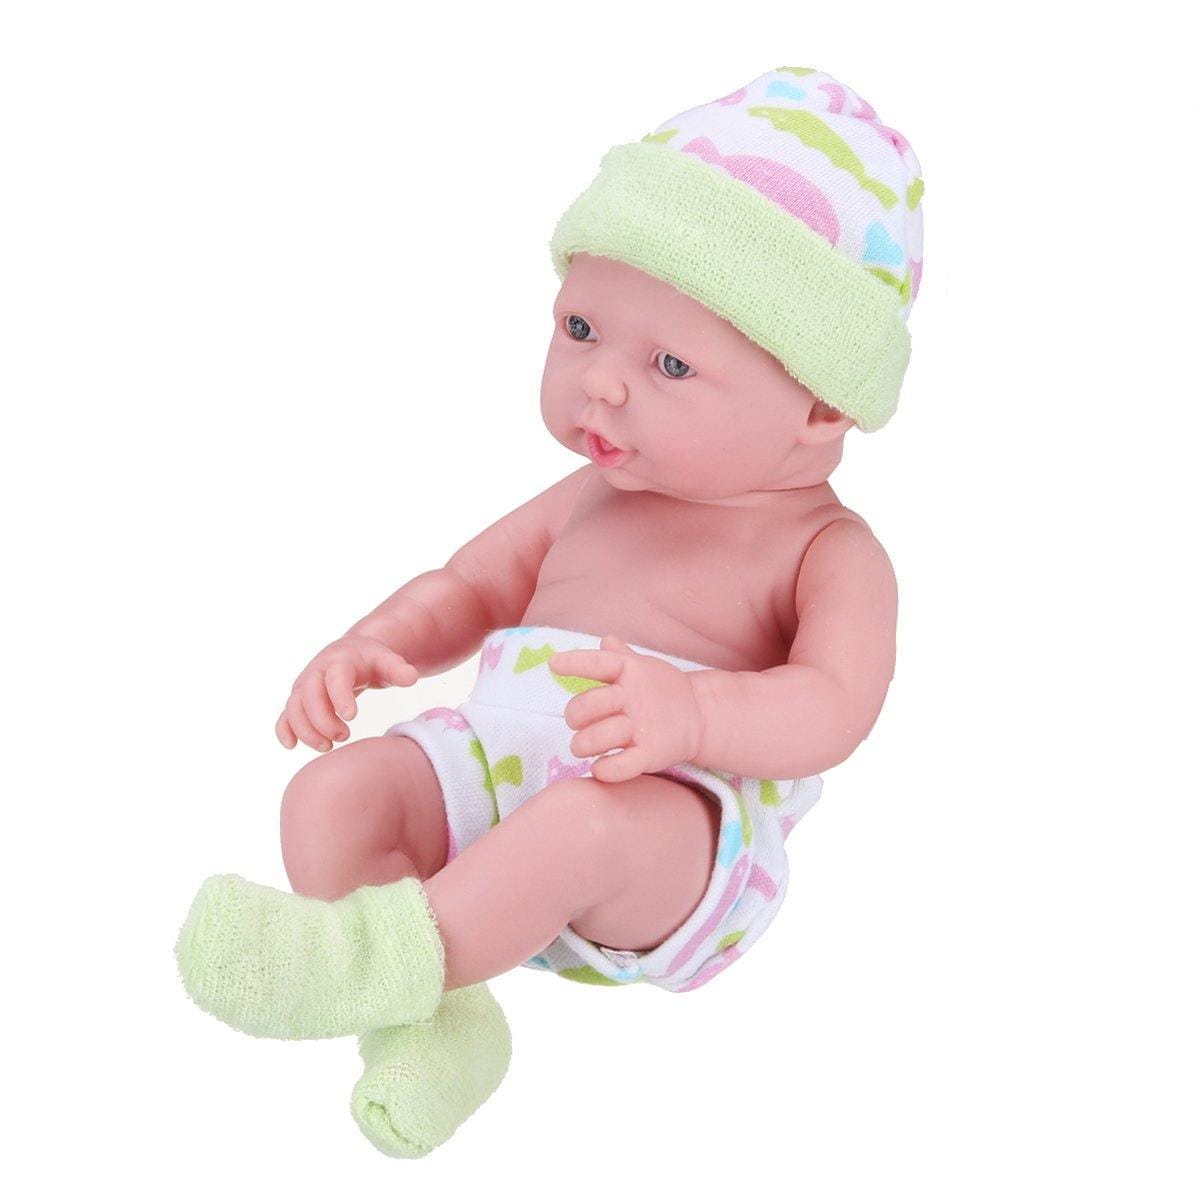 ezy2find dolls Green Newborn Baby Dolls Gift Toys Soft Vinyl Silicone Lifelike Newborn Kids Toddler Girl